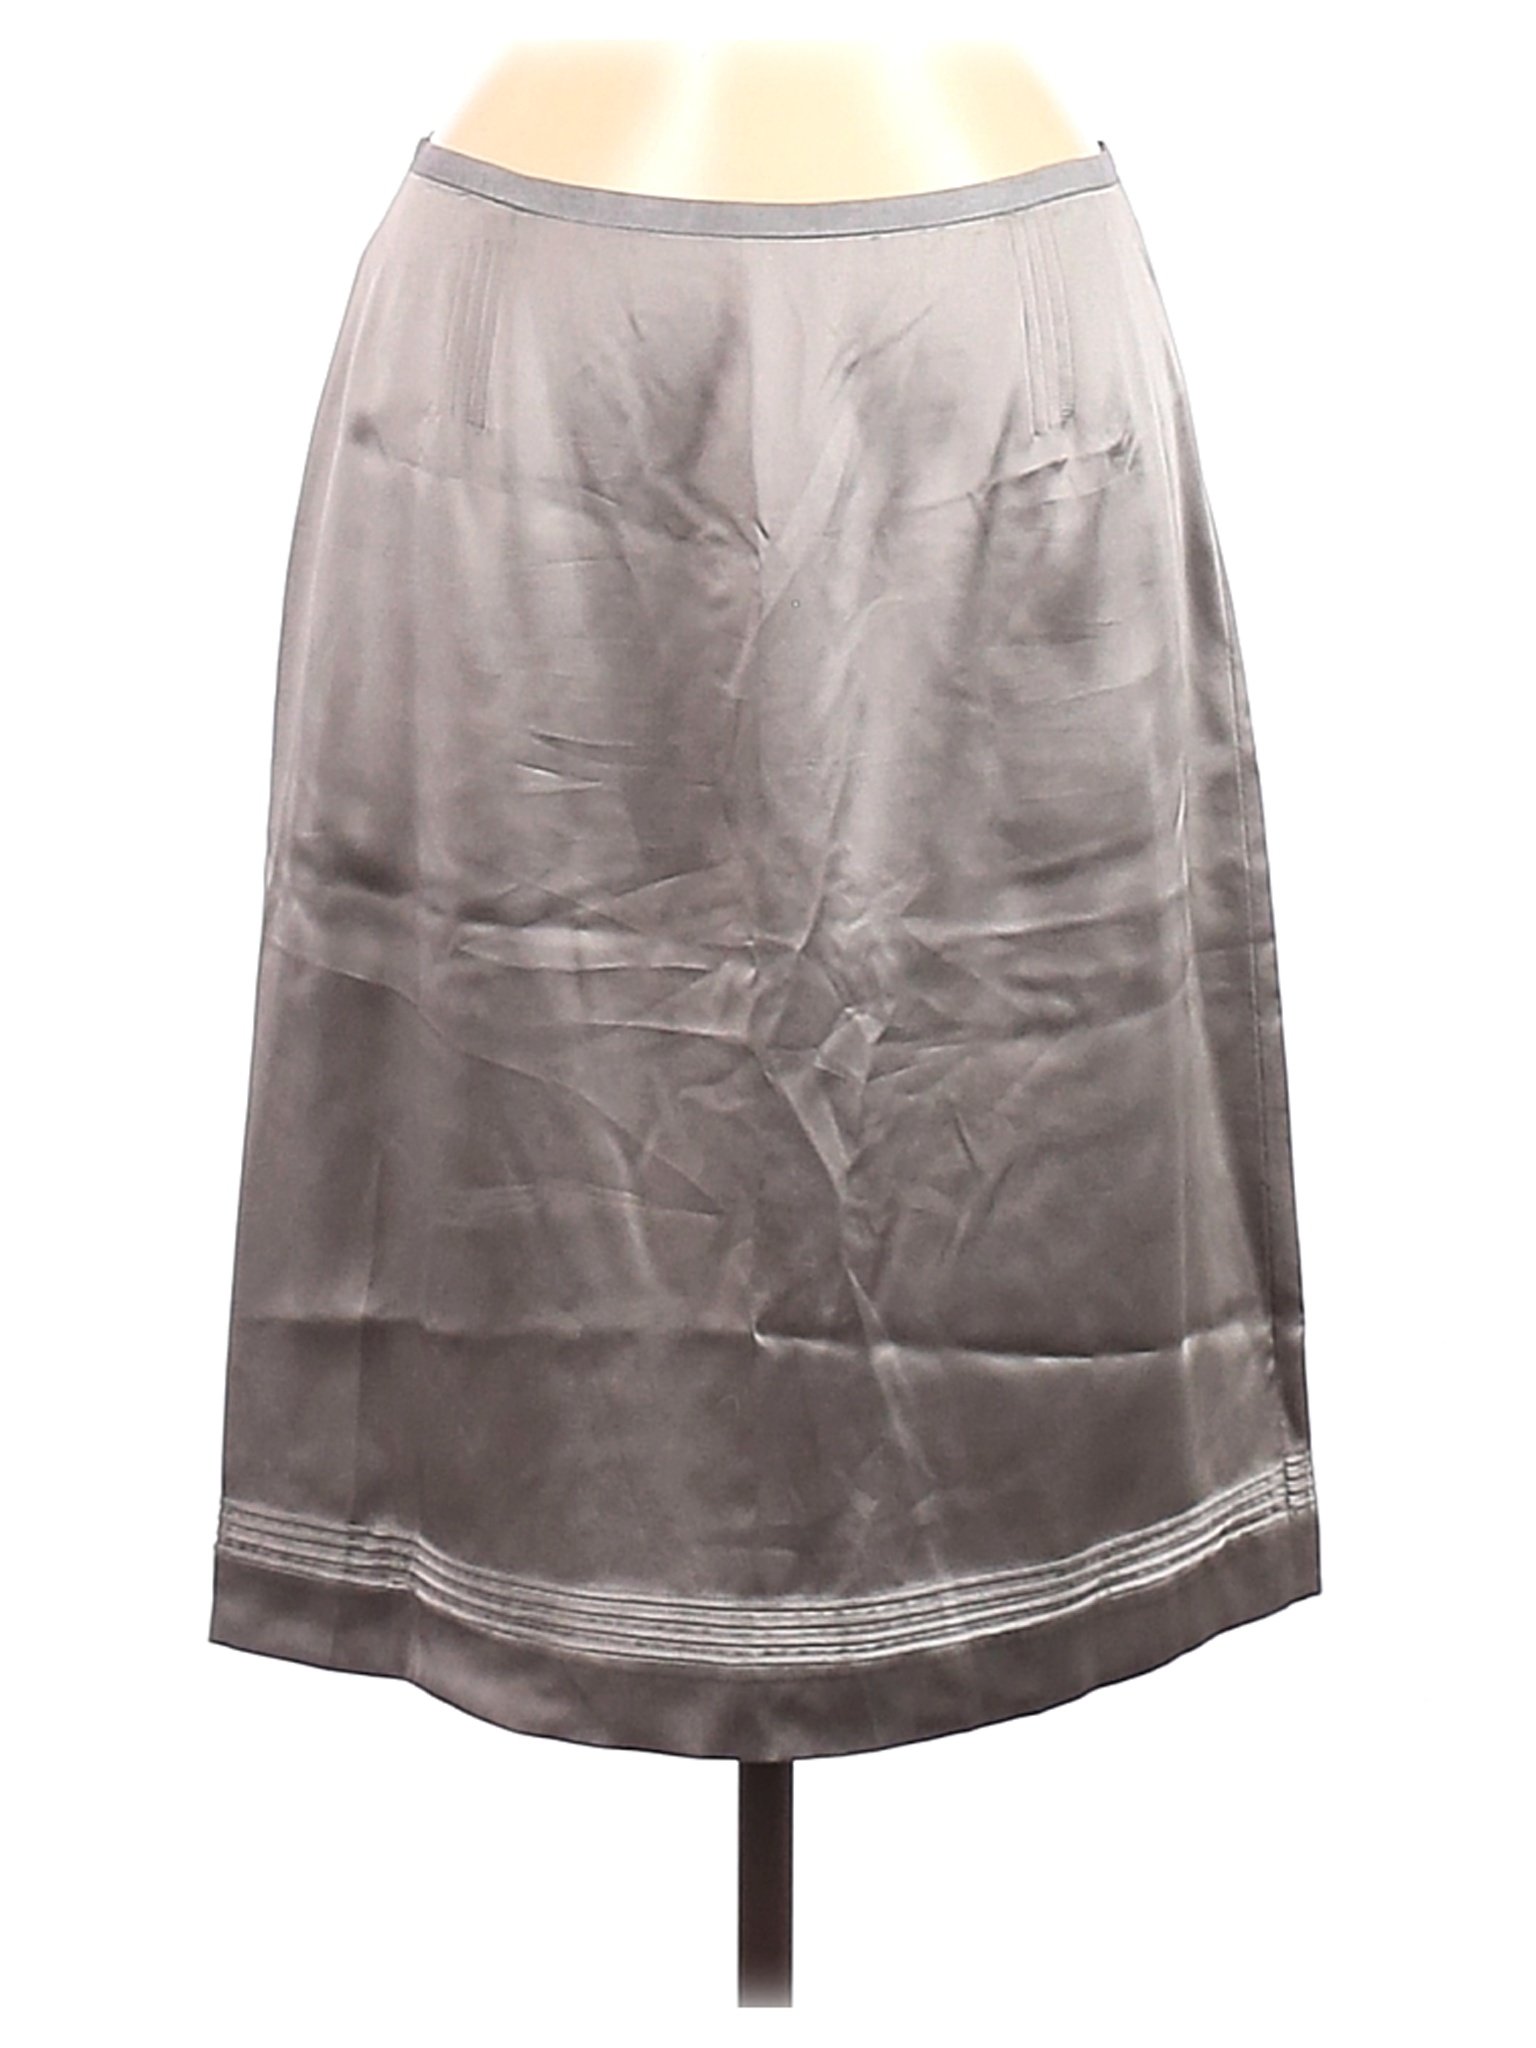 DKNY Women Gray Silk Skirt 6 | eBay